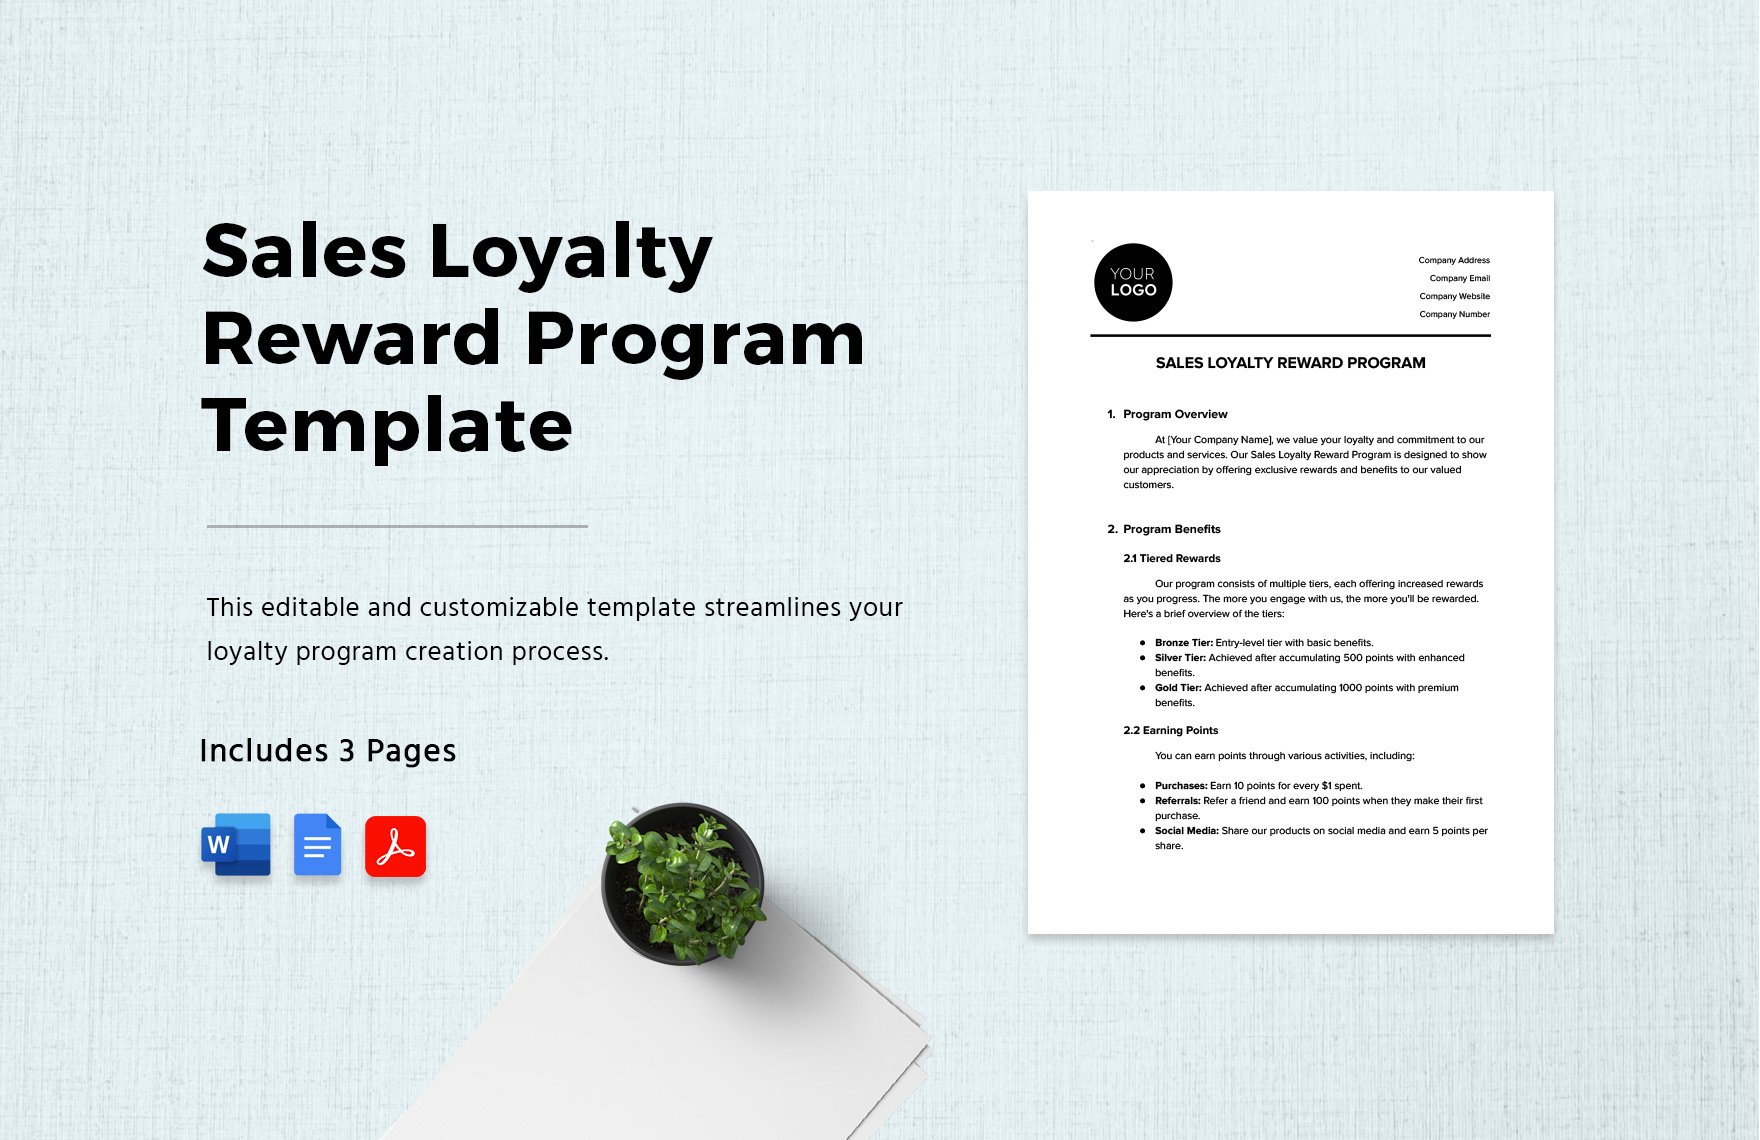 Sales Loyalty Reward Program Template in Word, Google Docs, PDF